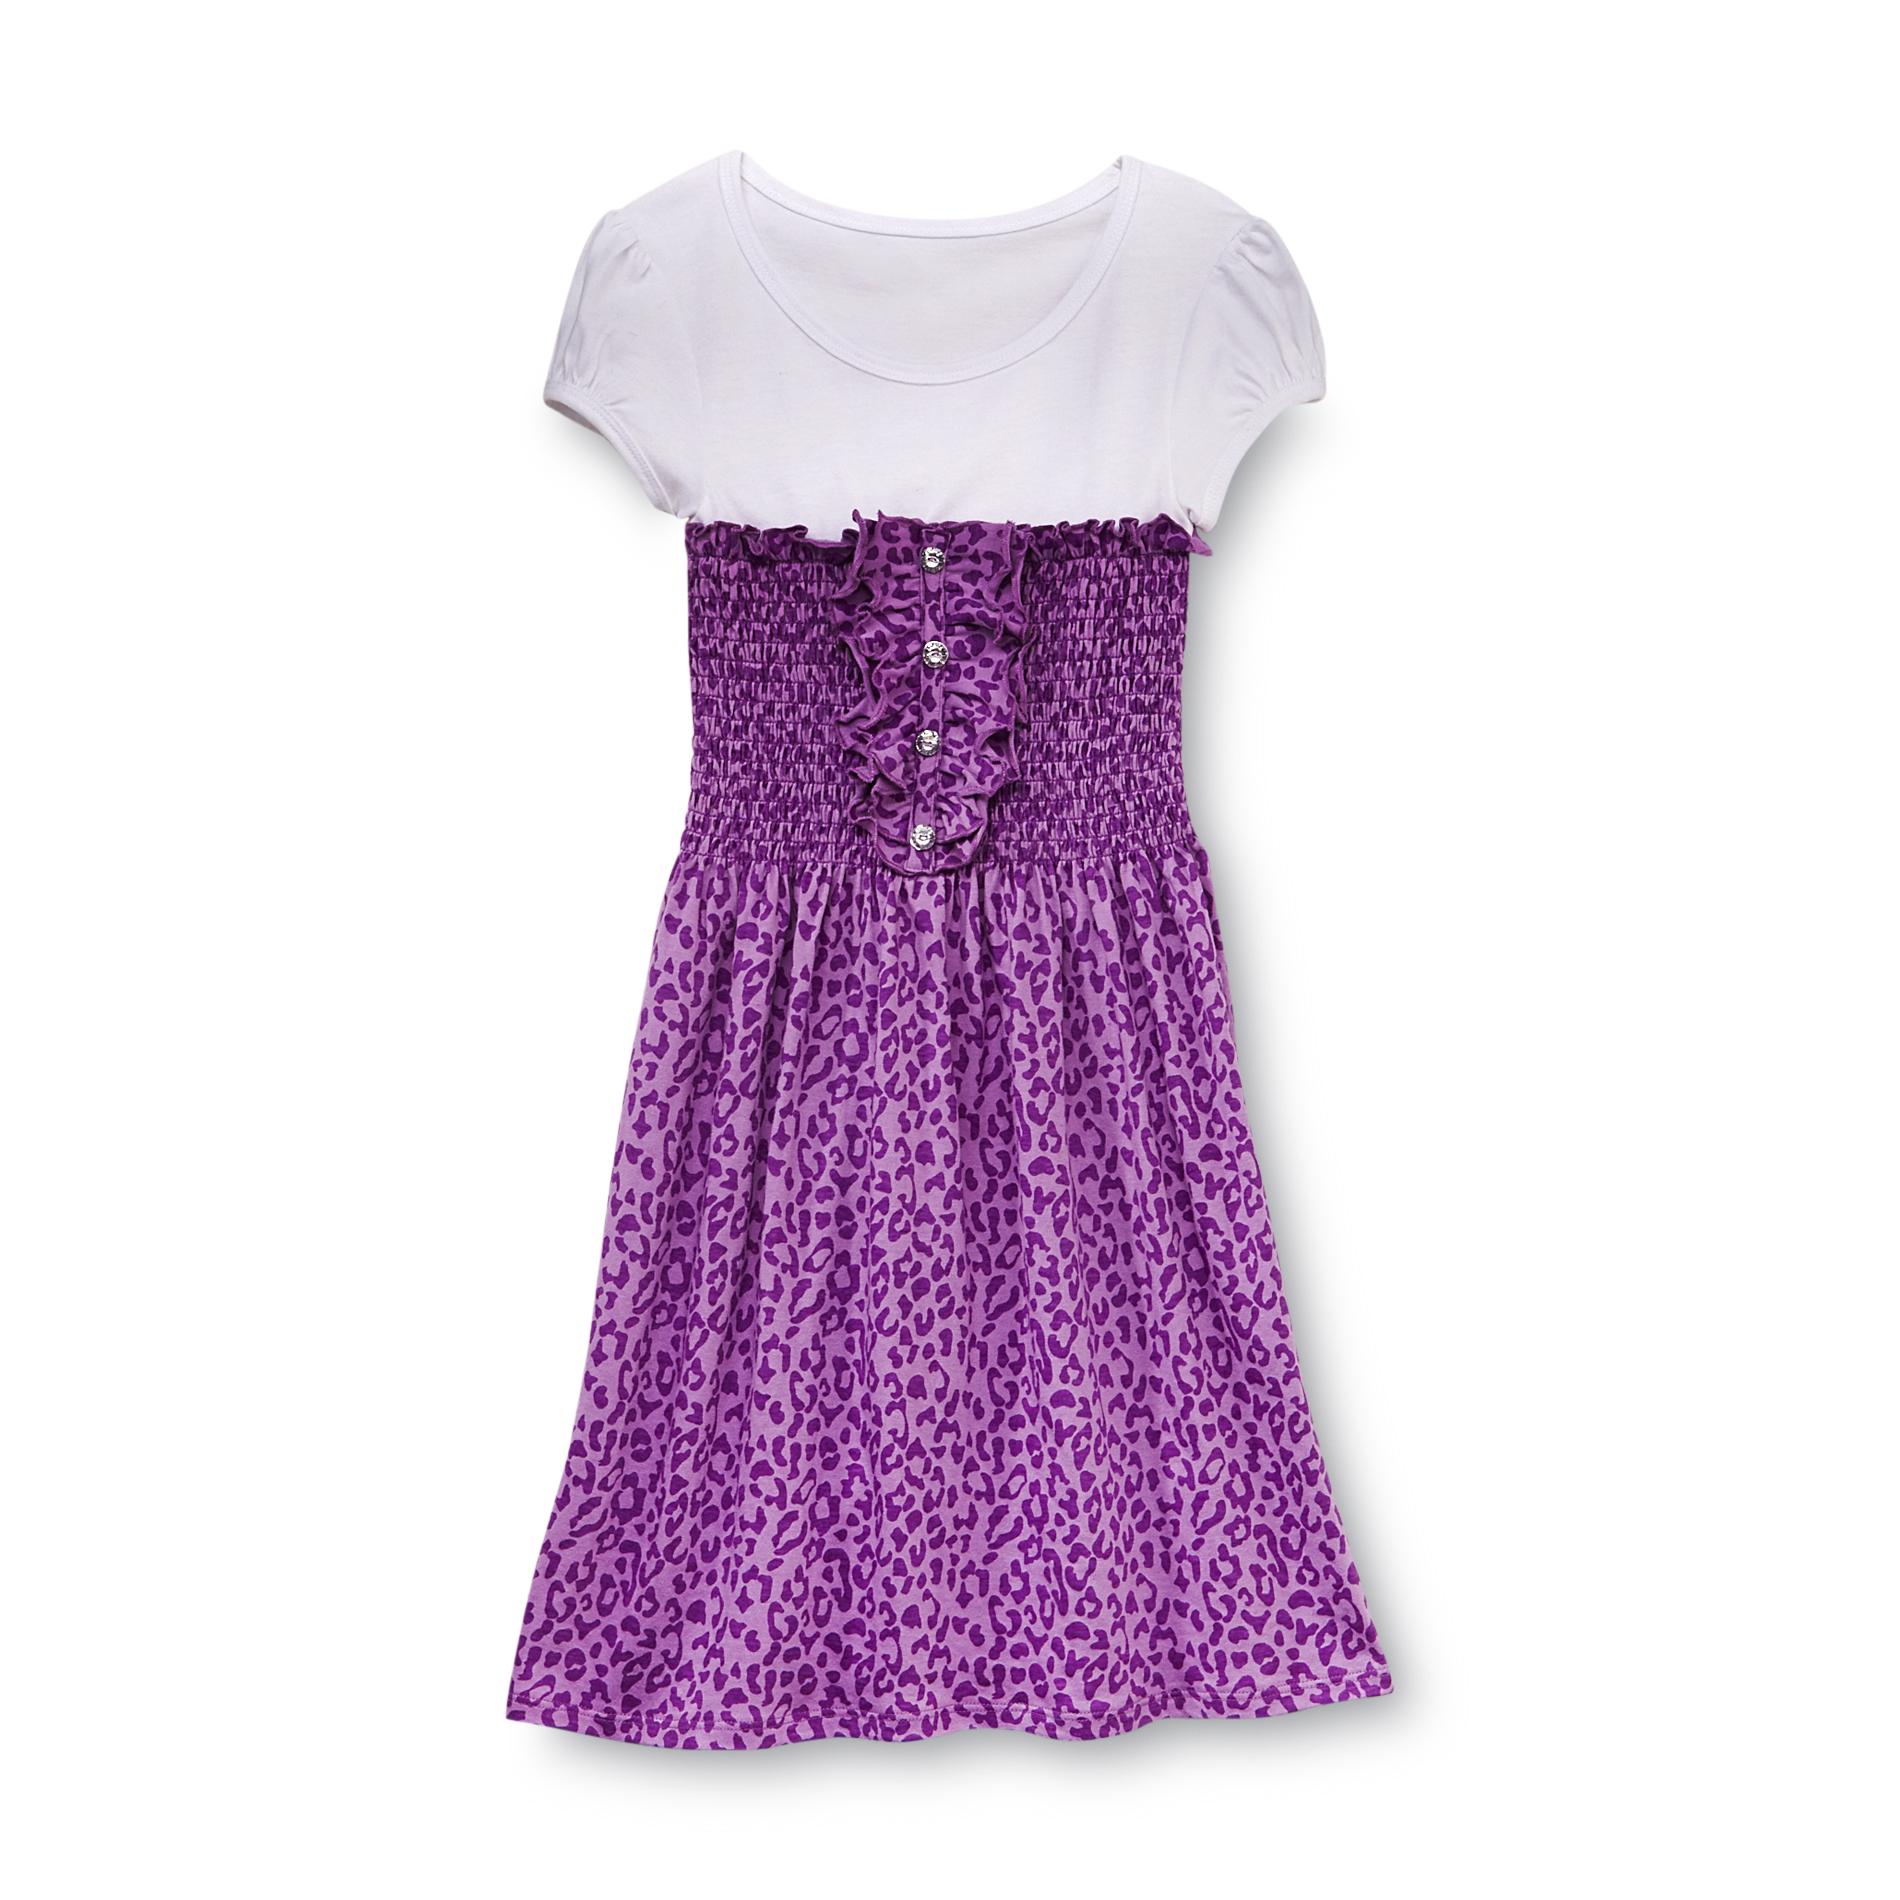 Basic Editions Girl's High-Waist Knit Dress - Leopard Print